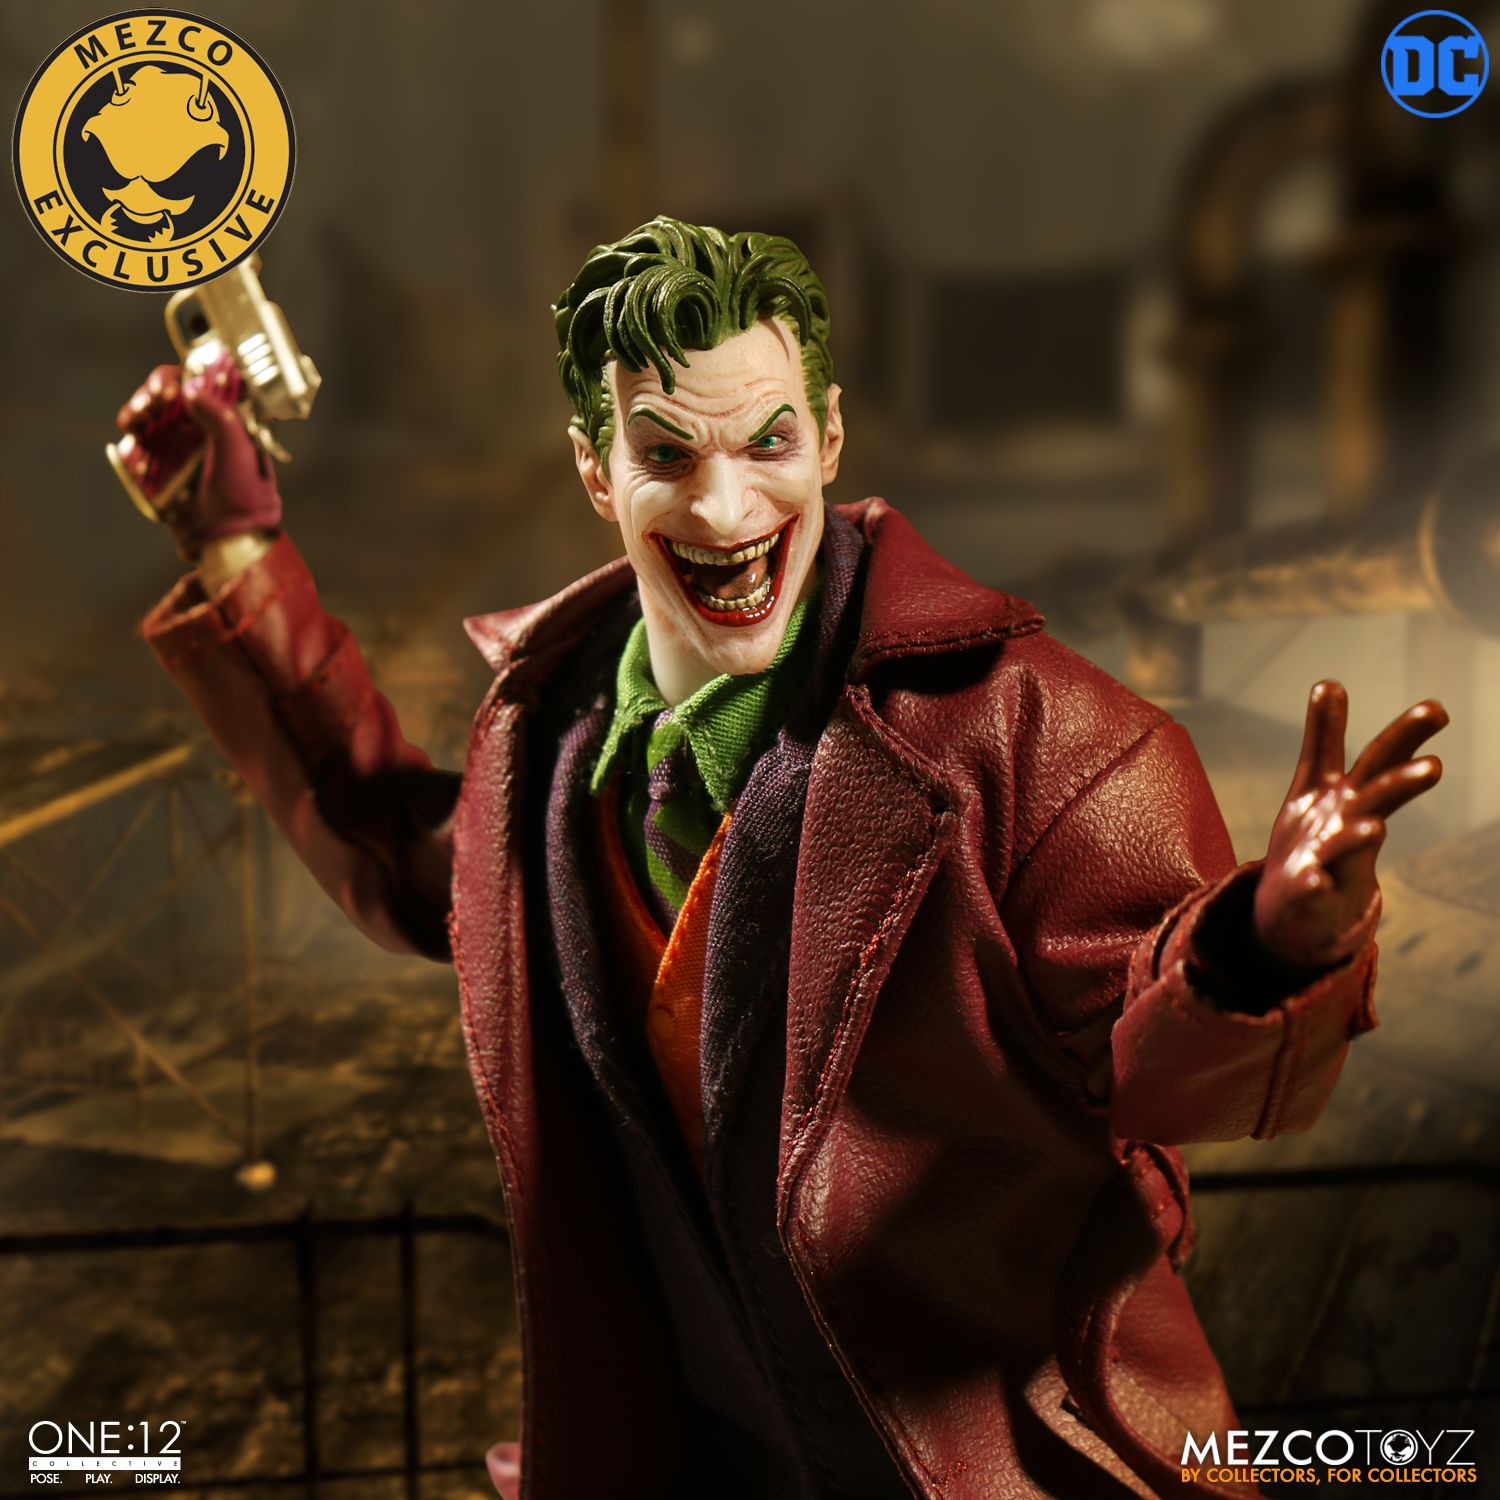 Details about   THE JOKER One:12 Collective MEZCO Action Figure Batman DC Universe Toy With Box 